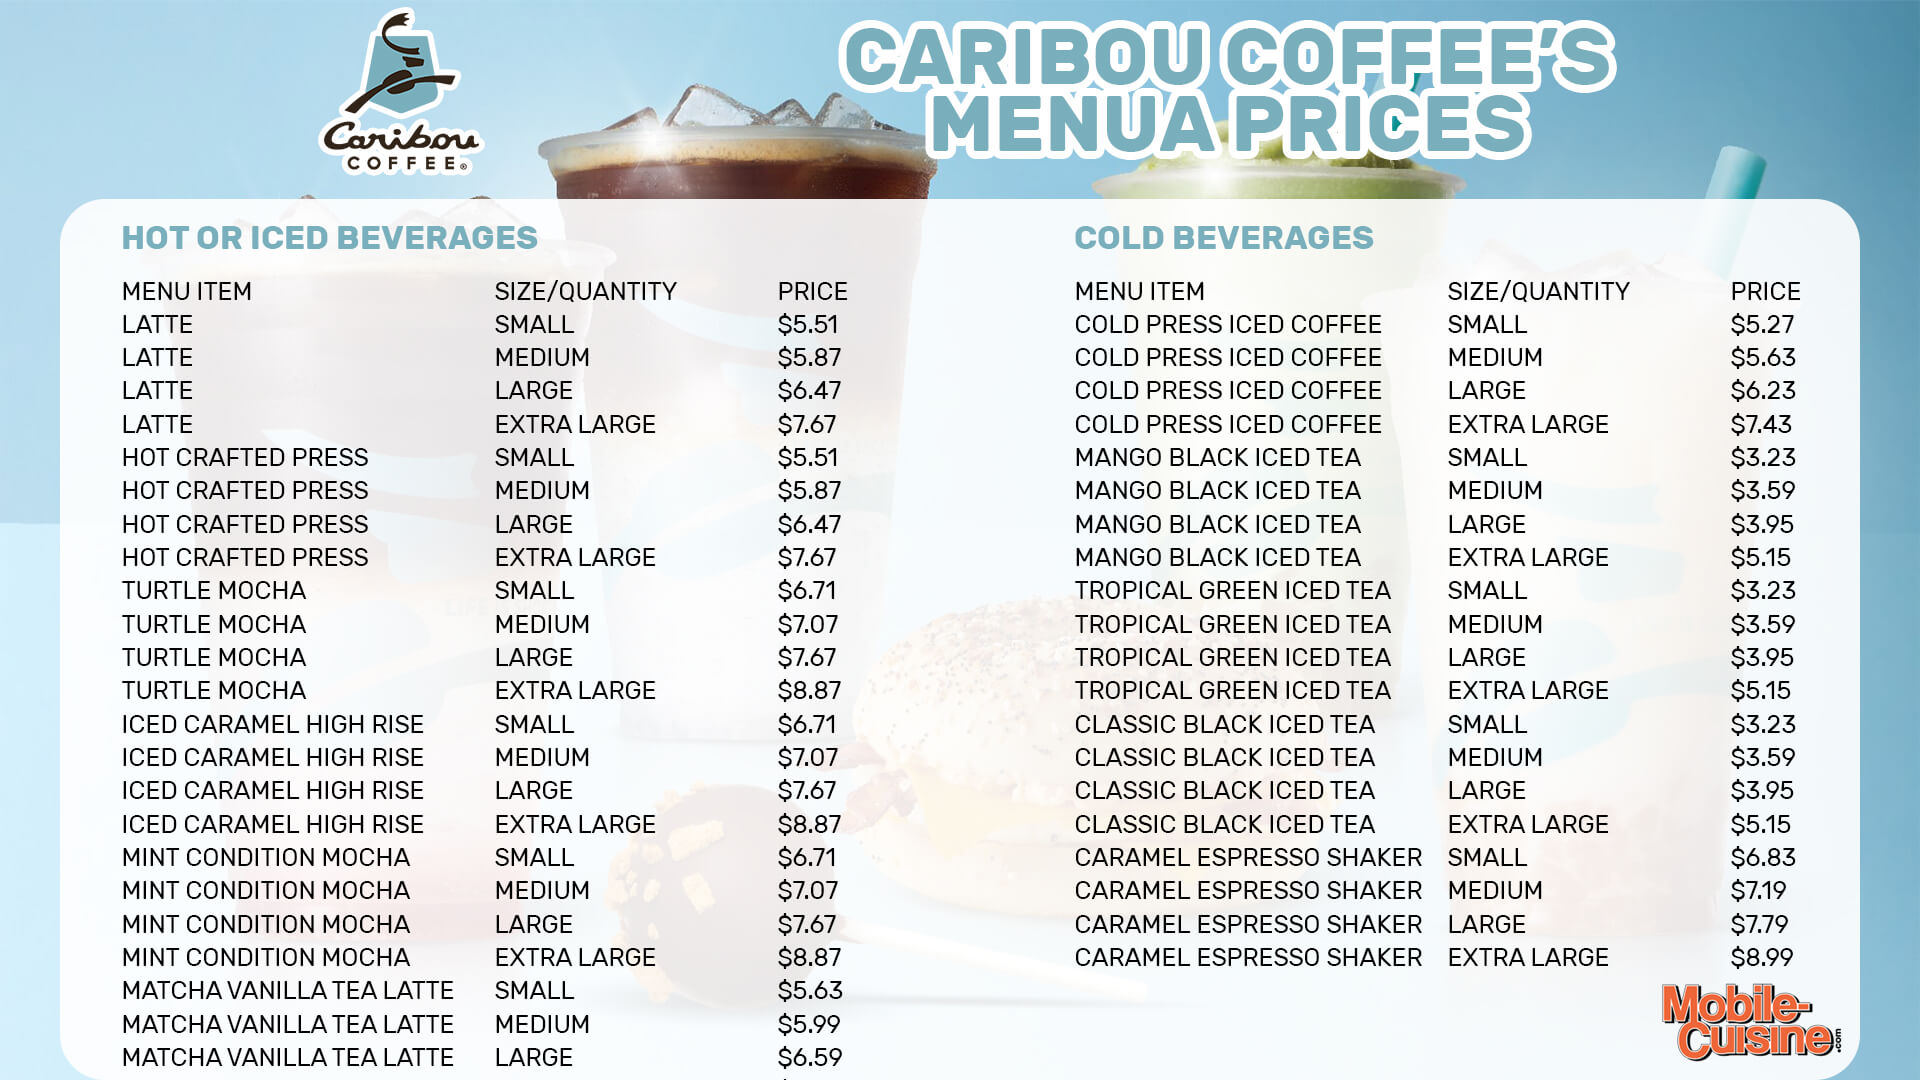 https://mobile-cuisine.com/wp-content/uploads/2023/04/Caribou-Coffee-Menu-Prices.jpg